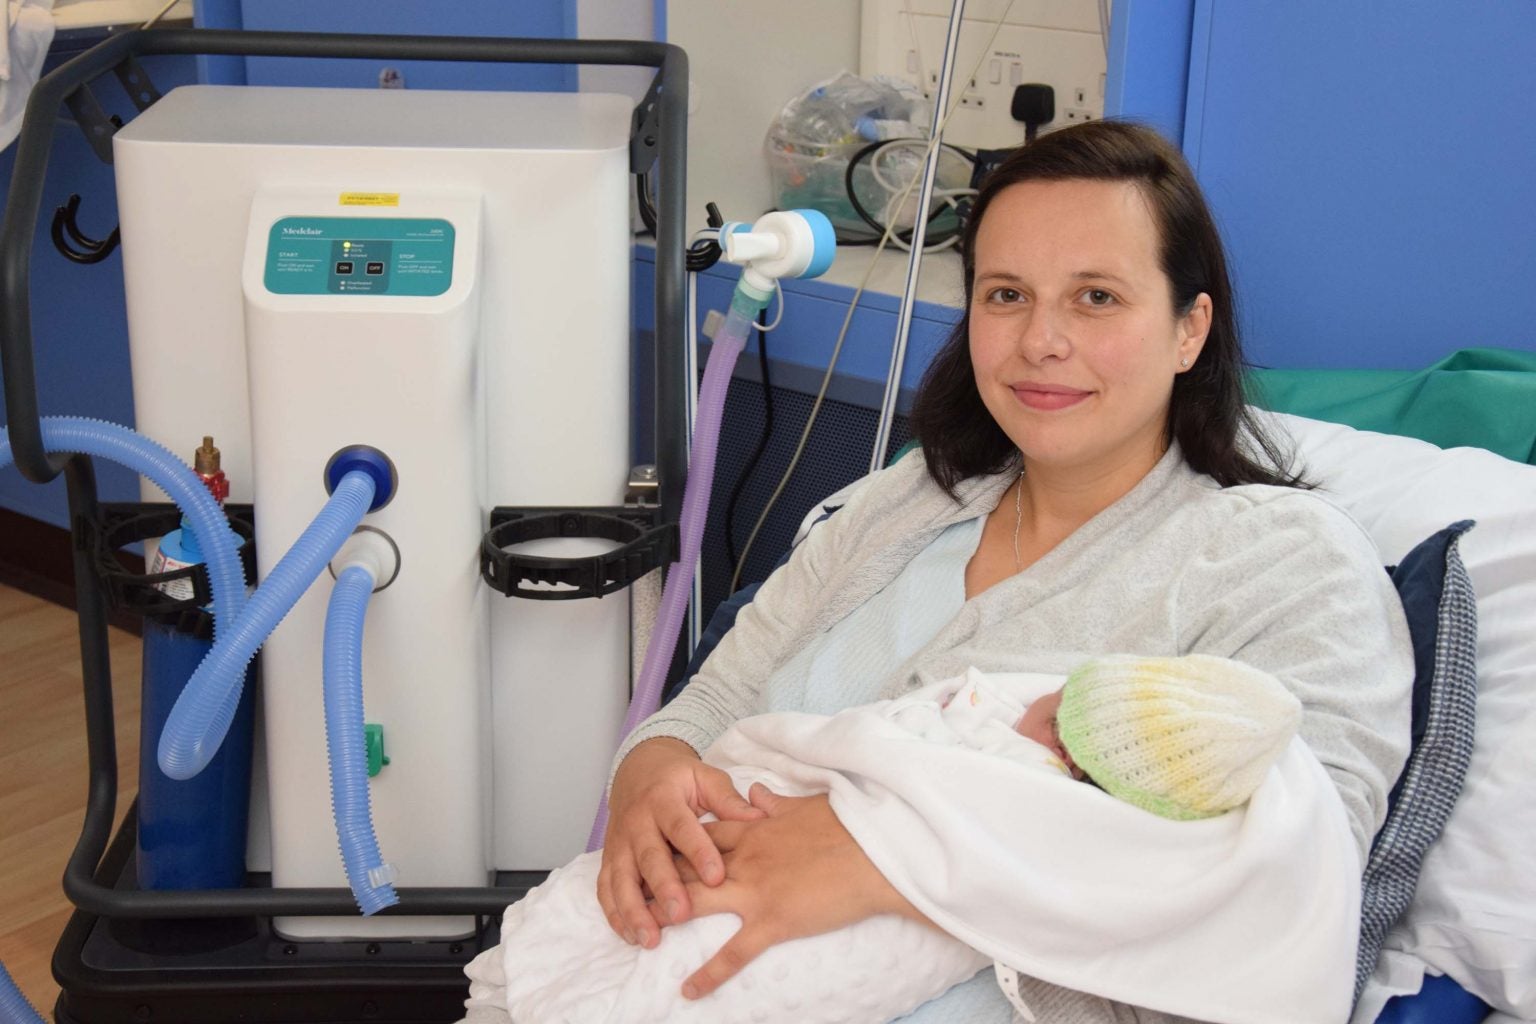 Kaja Gersinska gave birth to Rosie Martha O’Sullivan using carbon capture technology